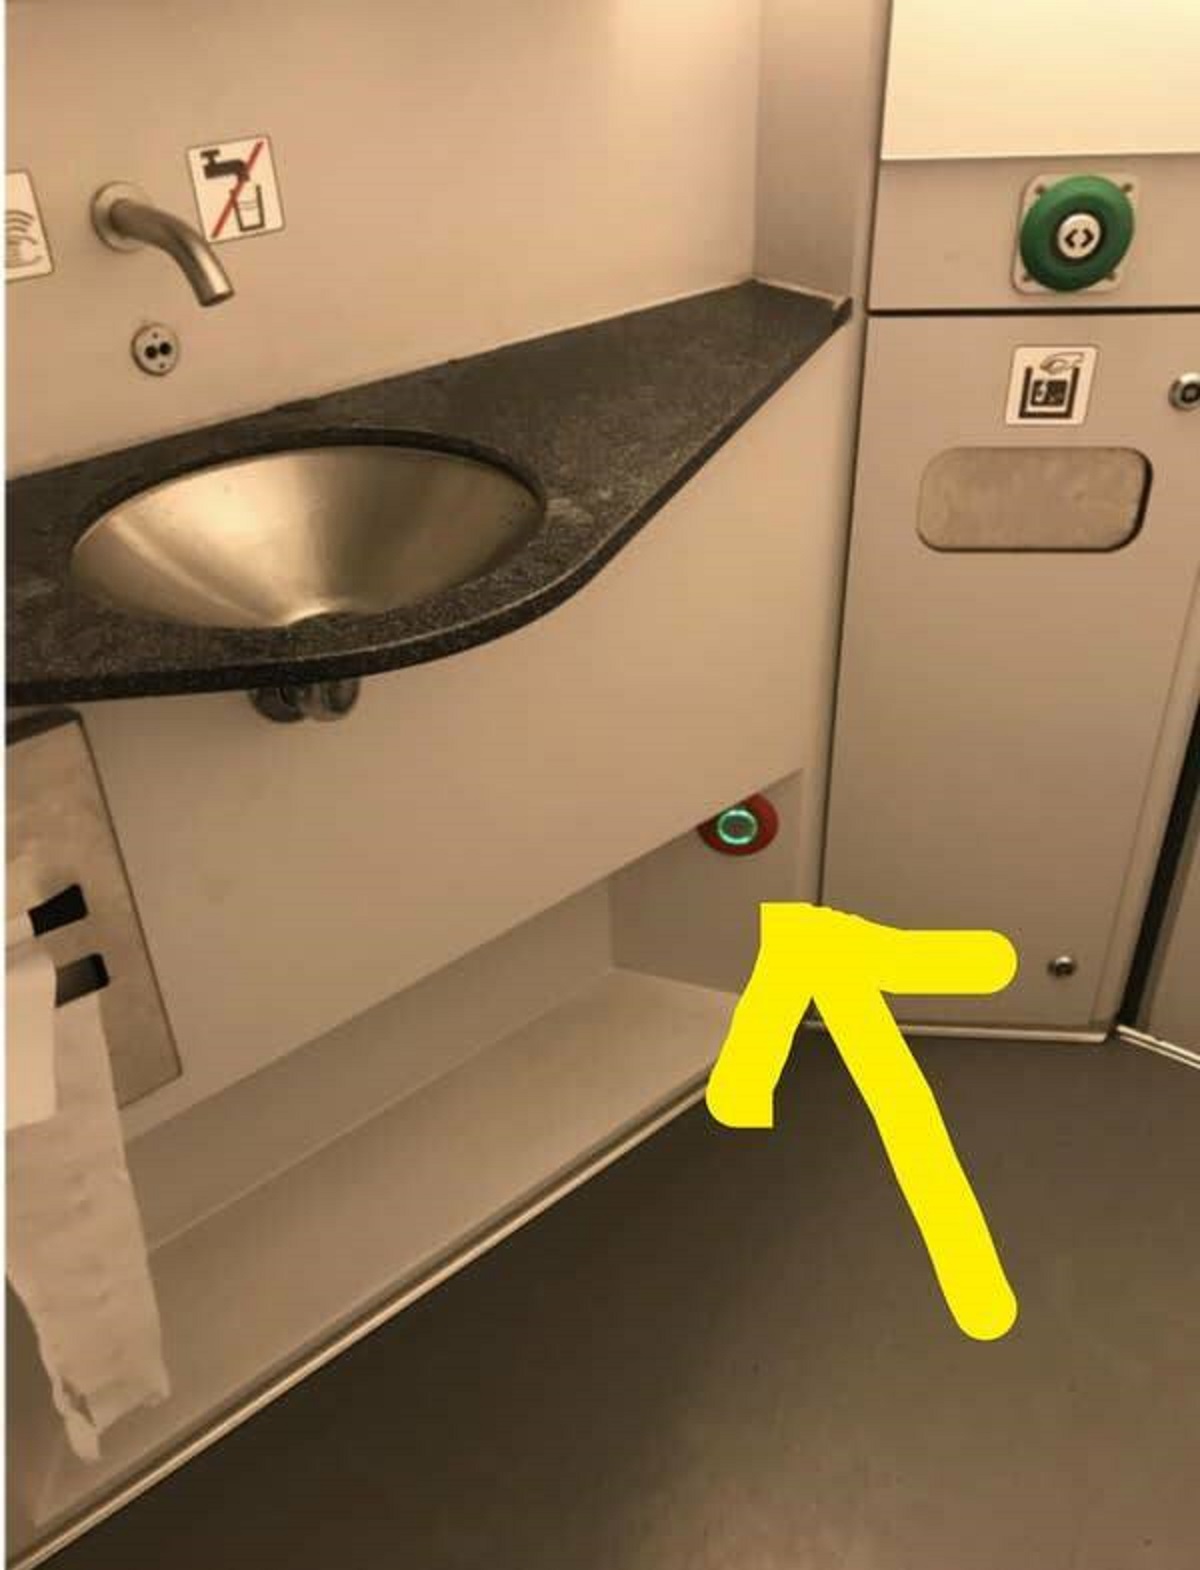 Belgium has the same thing in their train bathrooms.